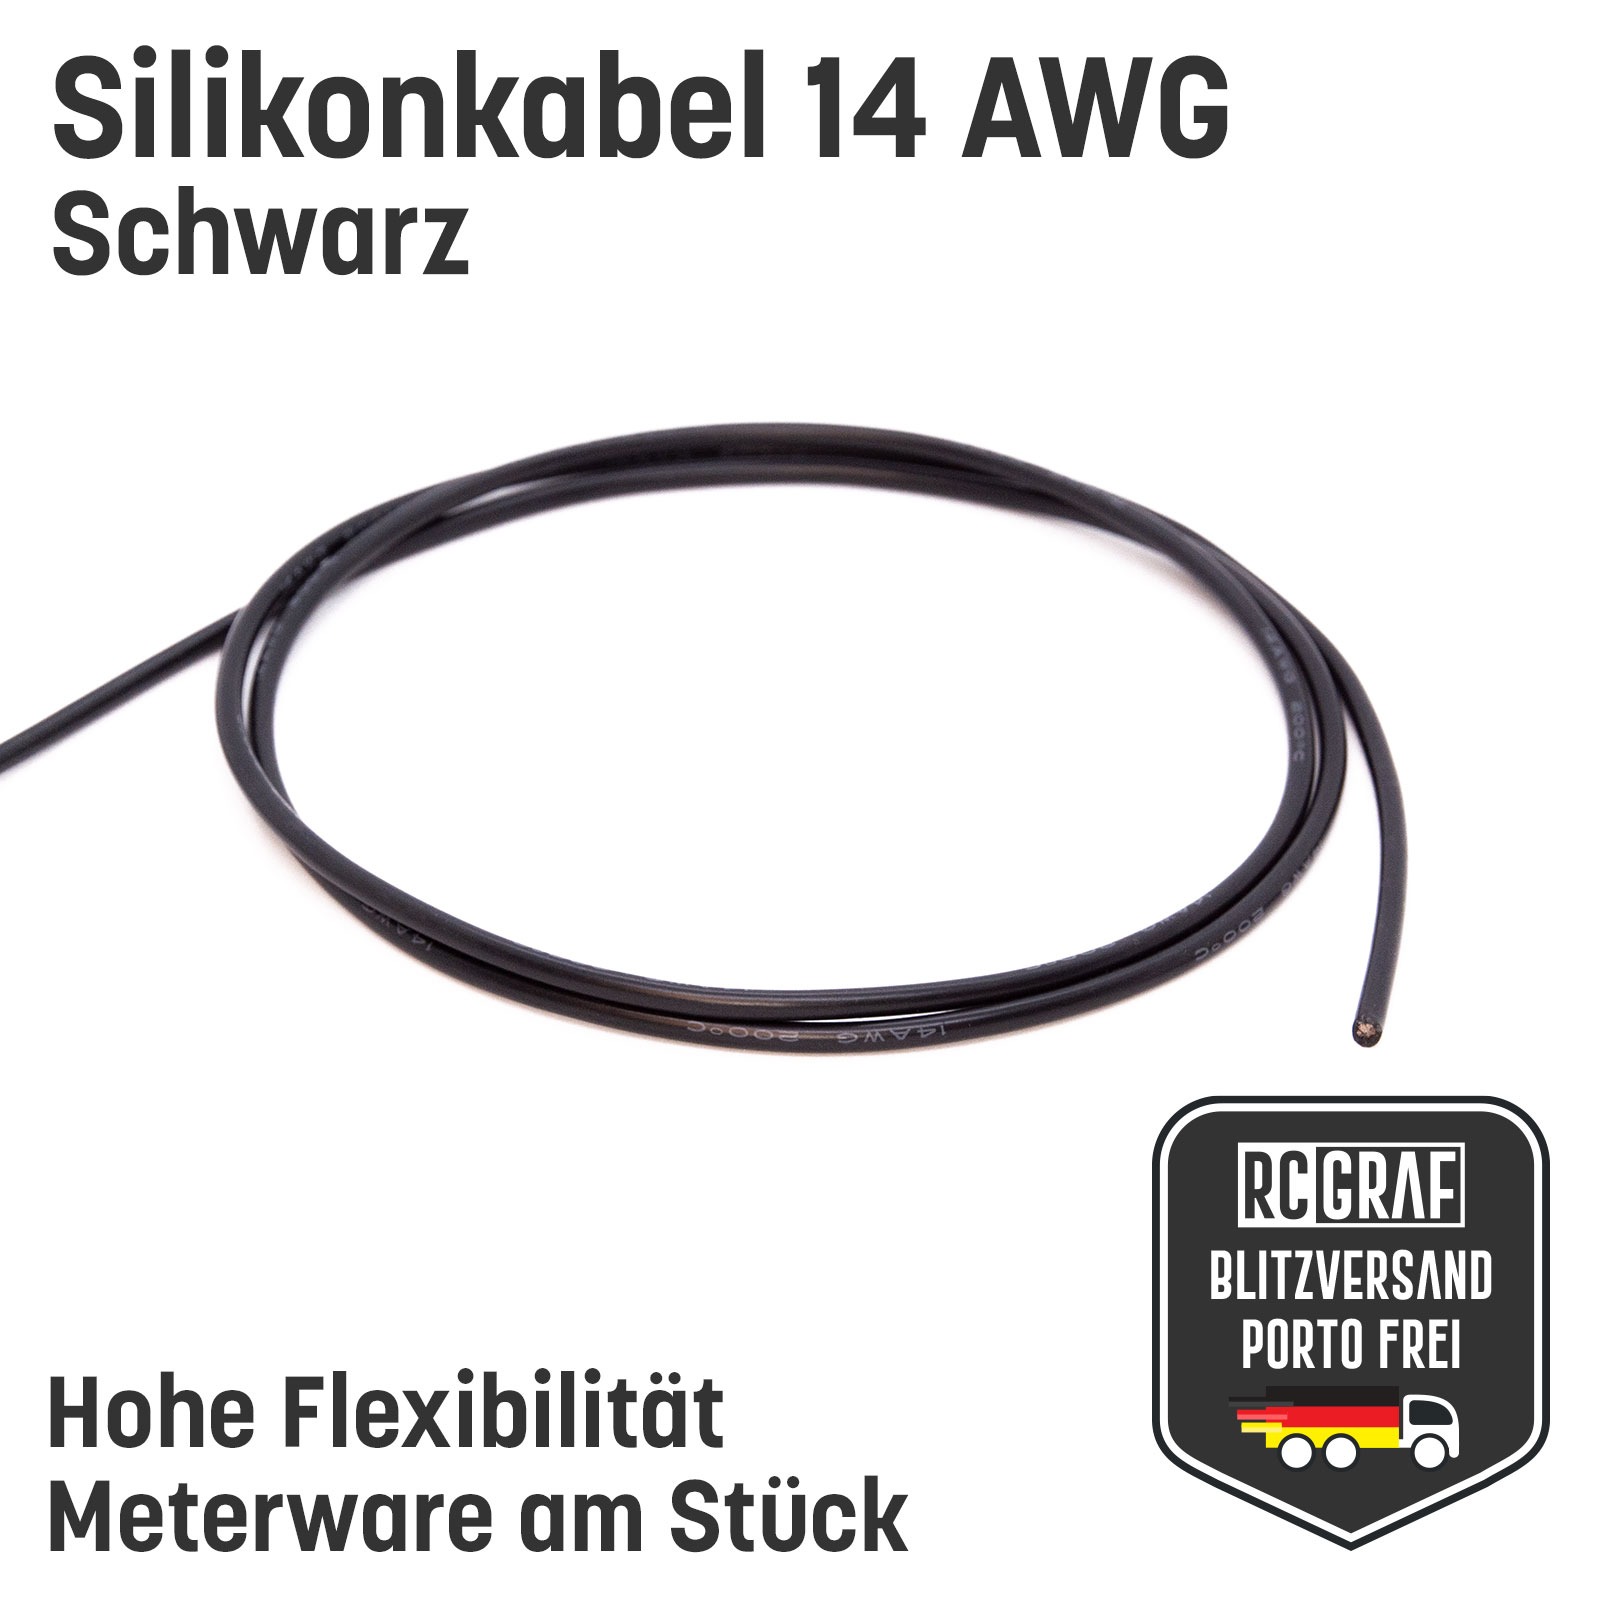 Silikonkabel 14 AWG 1 Meter Schwarz hochflexibel